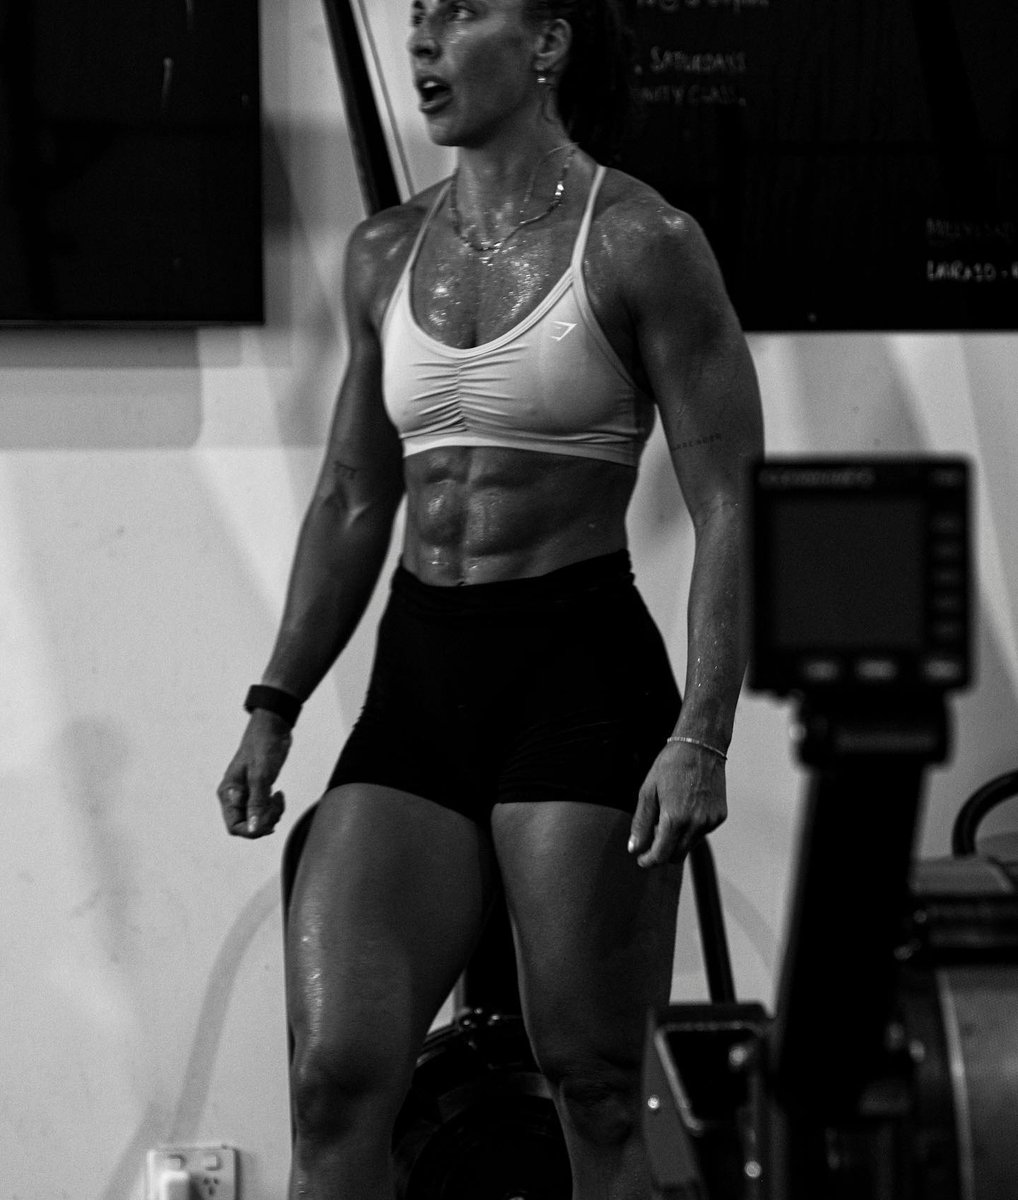 📸 Laura Roberts

Caption: GRACEFUL 
#LauraRoberts #CrossFit #gymgirl
#abs #WWEBacklash #Madrid 
#gym #Barca #Girona #Kendrick
#gymgirl #ufc301 #Birmingham